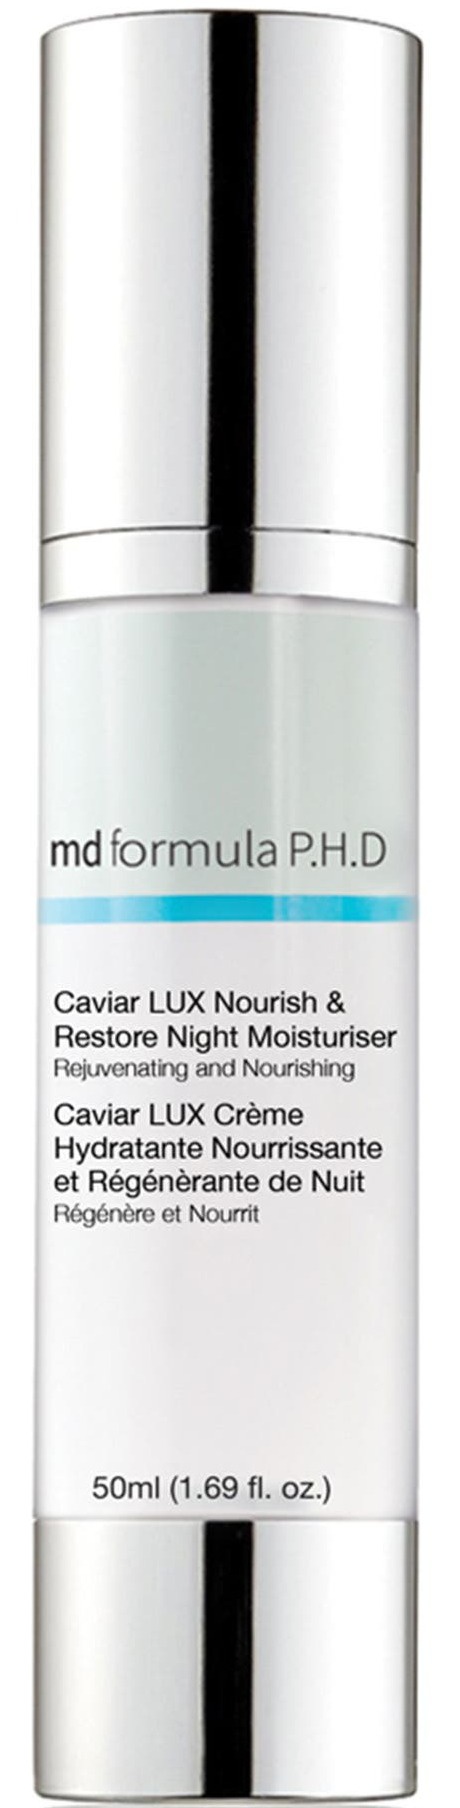 md formula P.H.D Caviar Lux Nourish And Restore Night Moisturiser